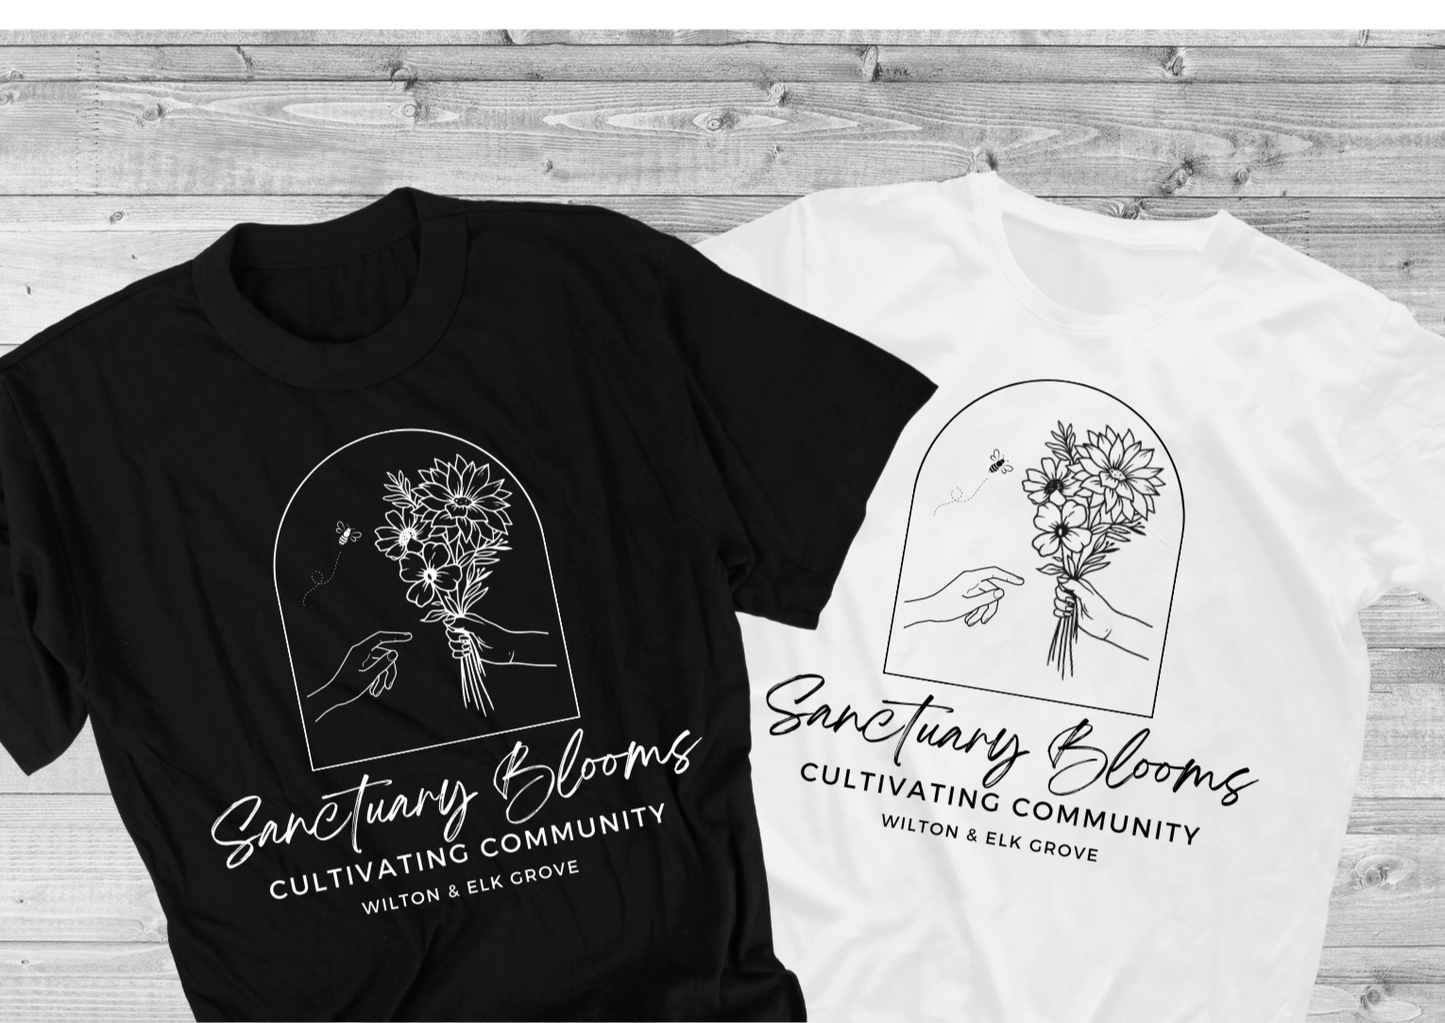 Sanctuary Blooms T-Shirt - Cultivating Community (3 Color Options)